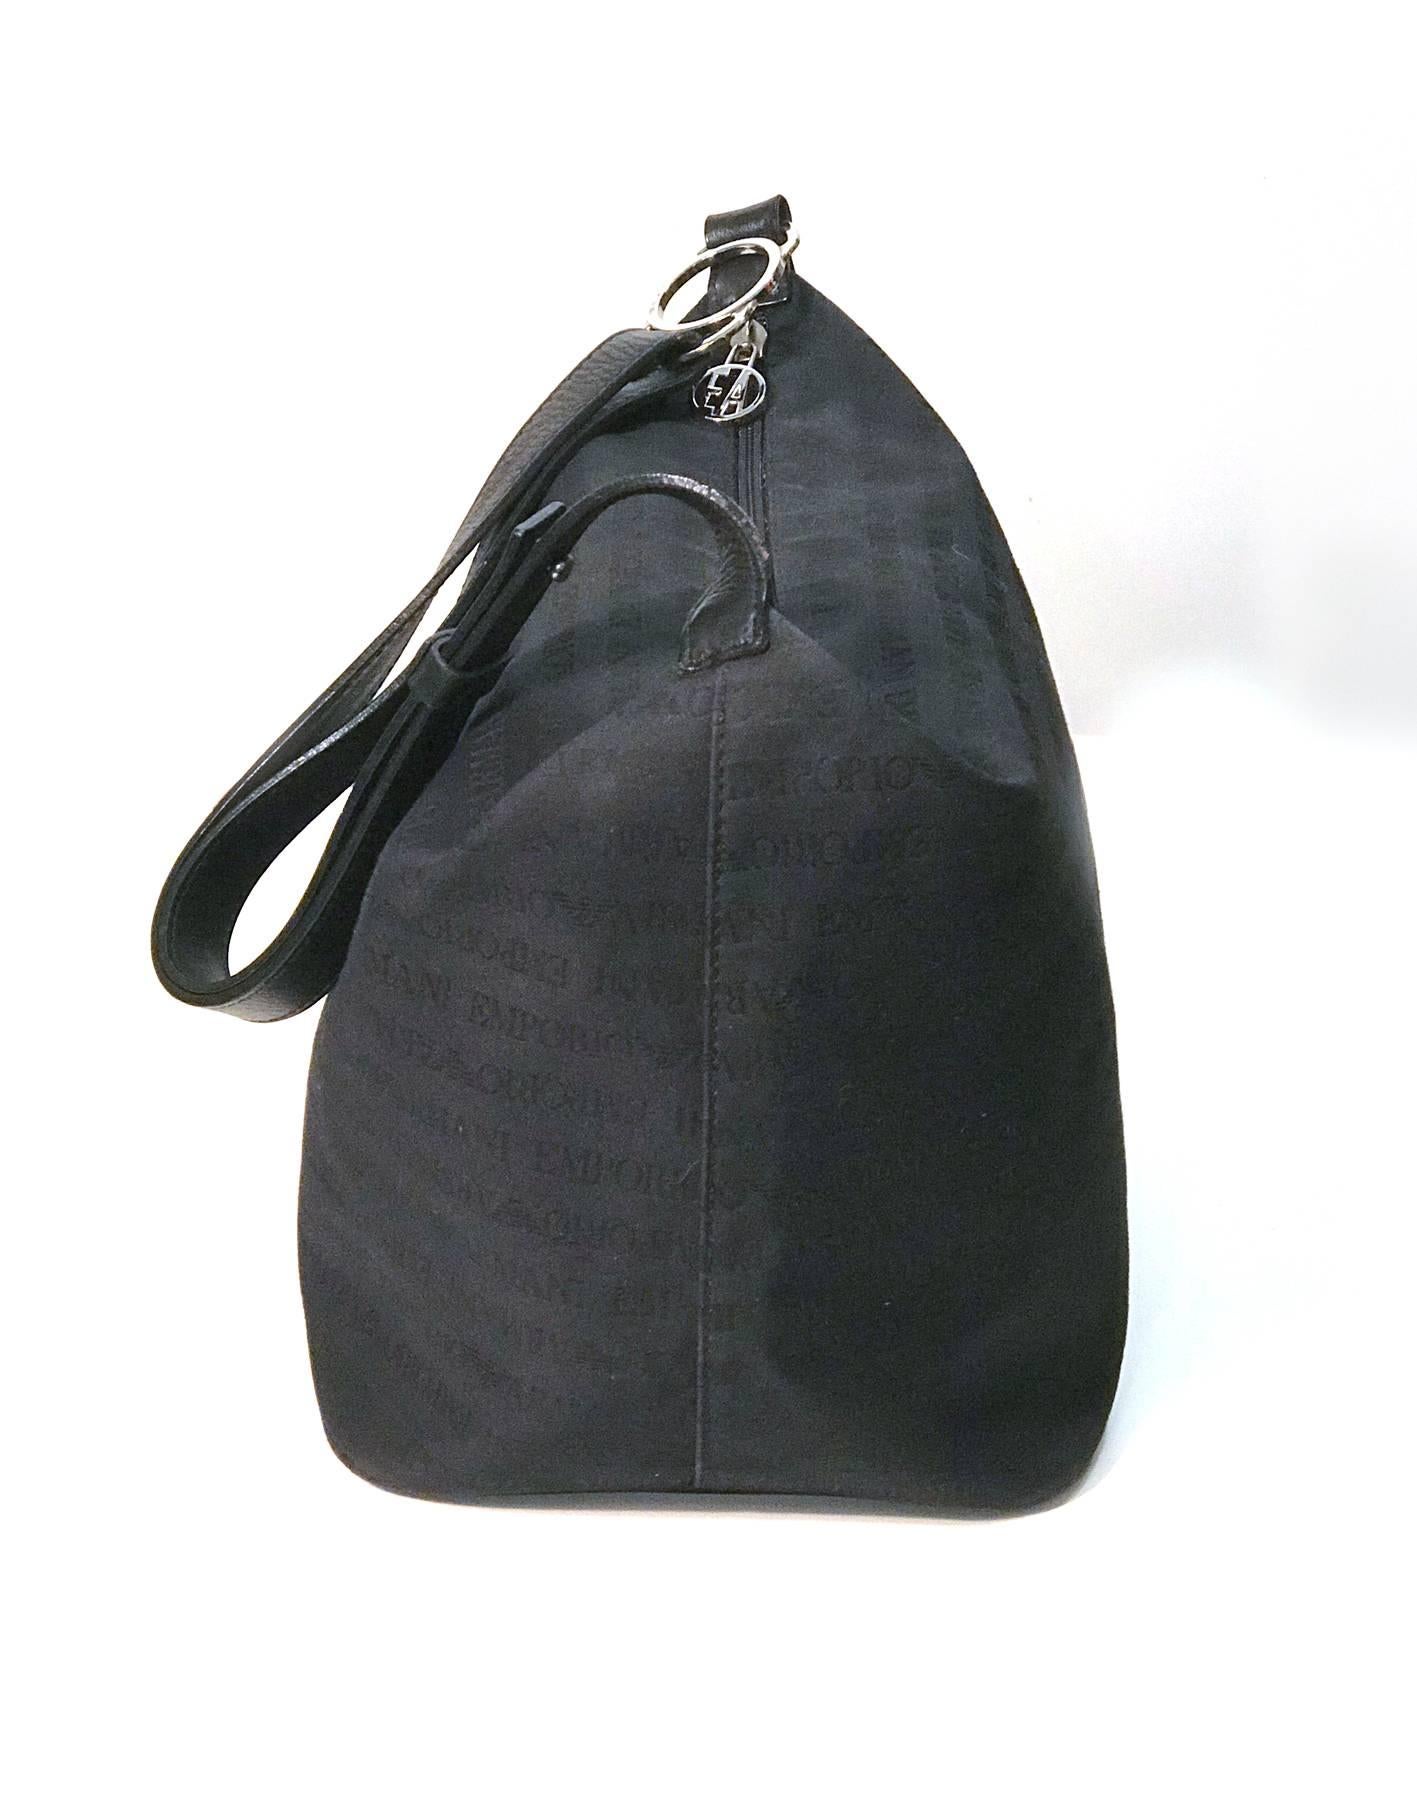 Women's or Men's Emporio Armani black canvas with monogram pattern shoulder bag. For Sale